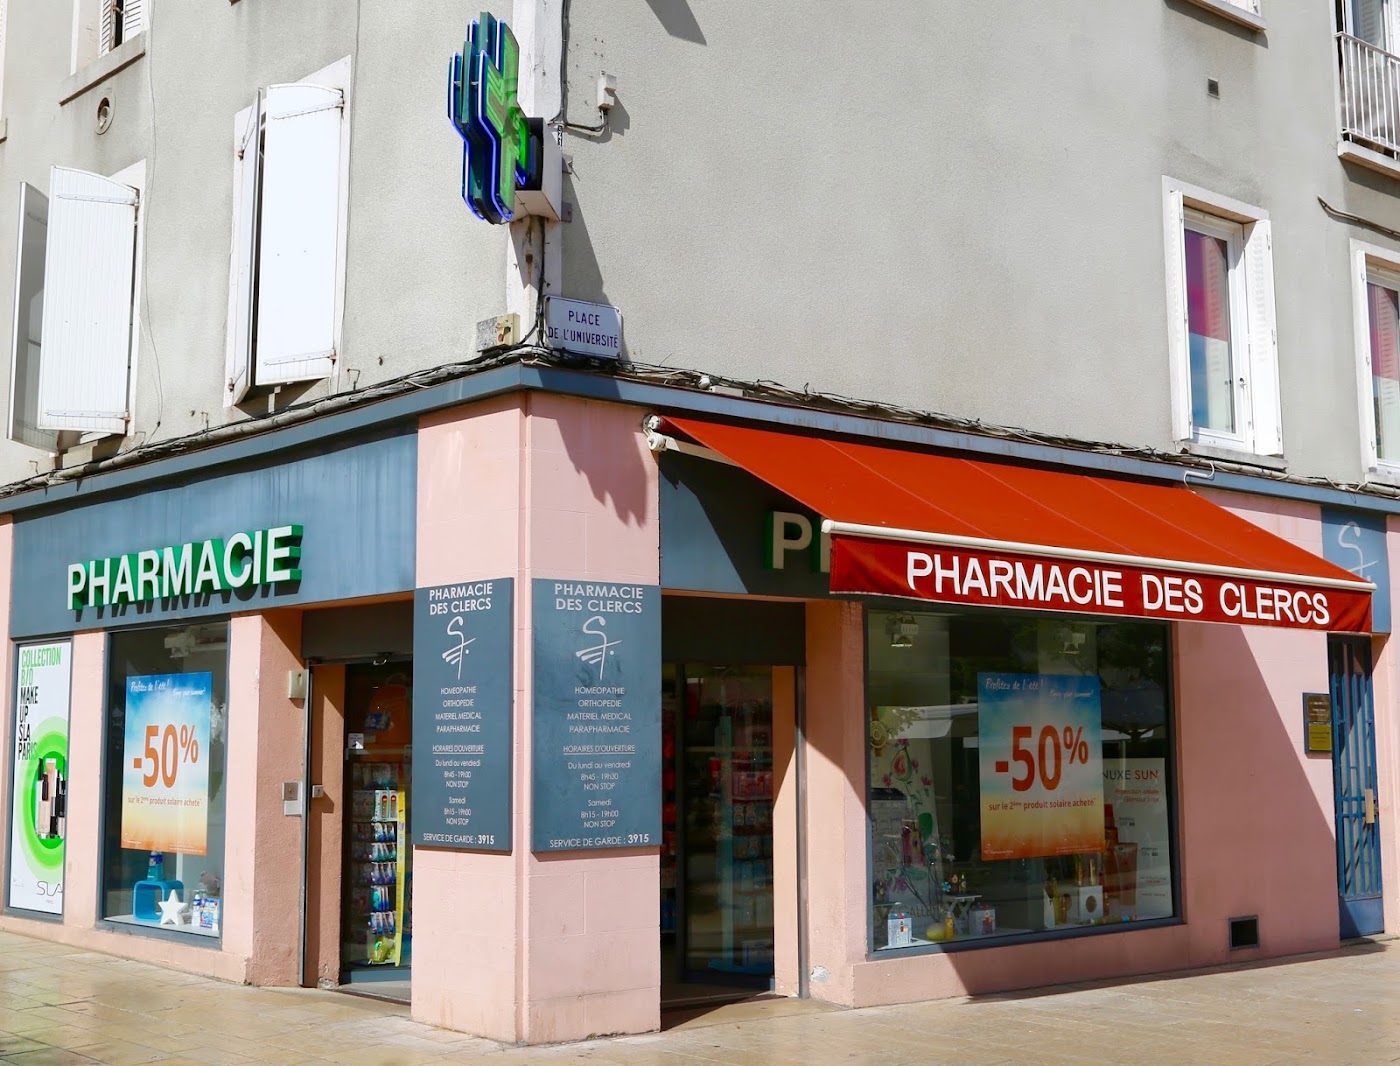 Pharmacie des Clercs